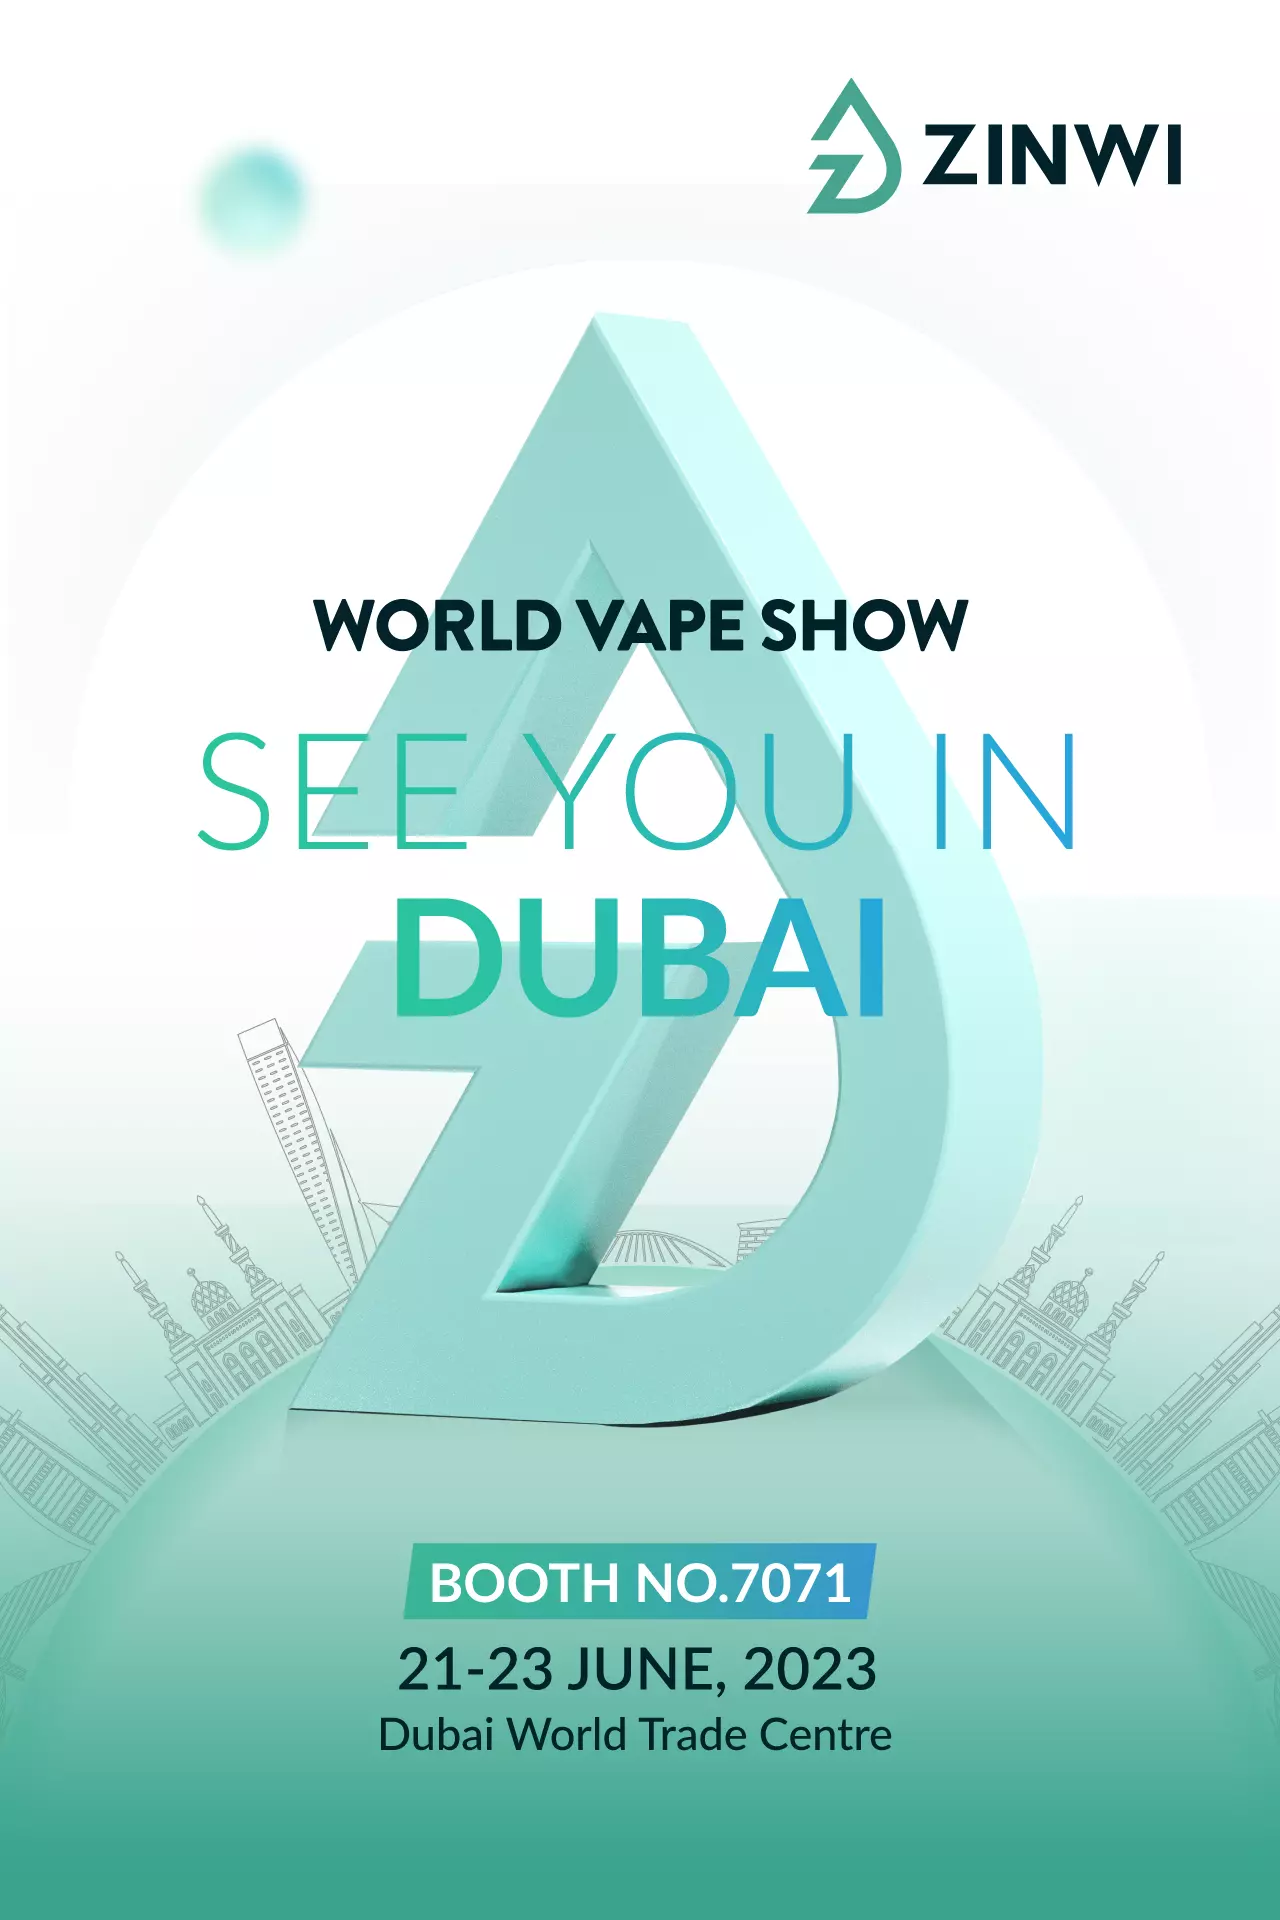 World Vape Show Dubai | Zinwi brings Middle Eastern Shisha Series!